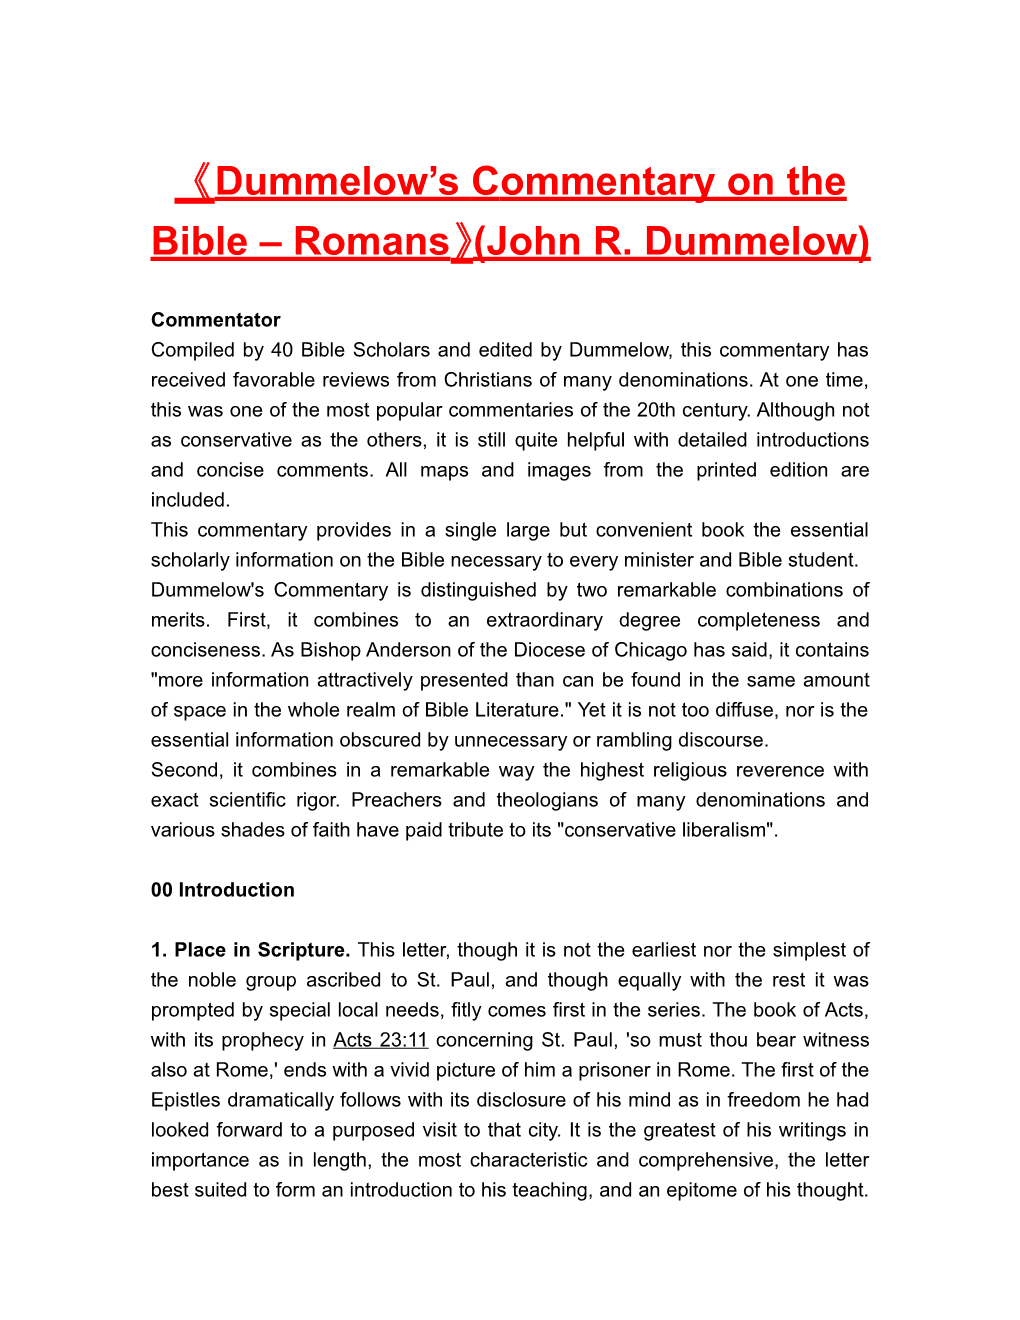 Dummelow Scommentaryon the Bible Romans (John R. Dummelow)